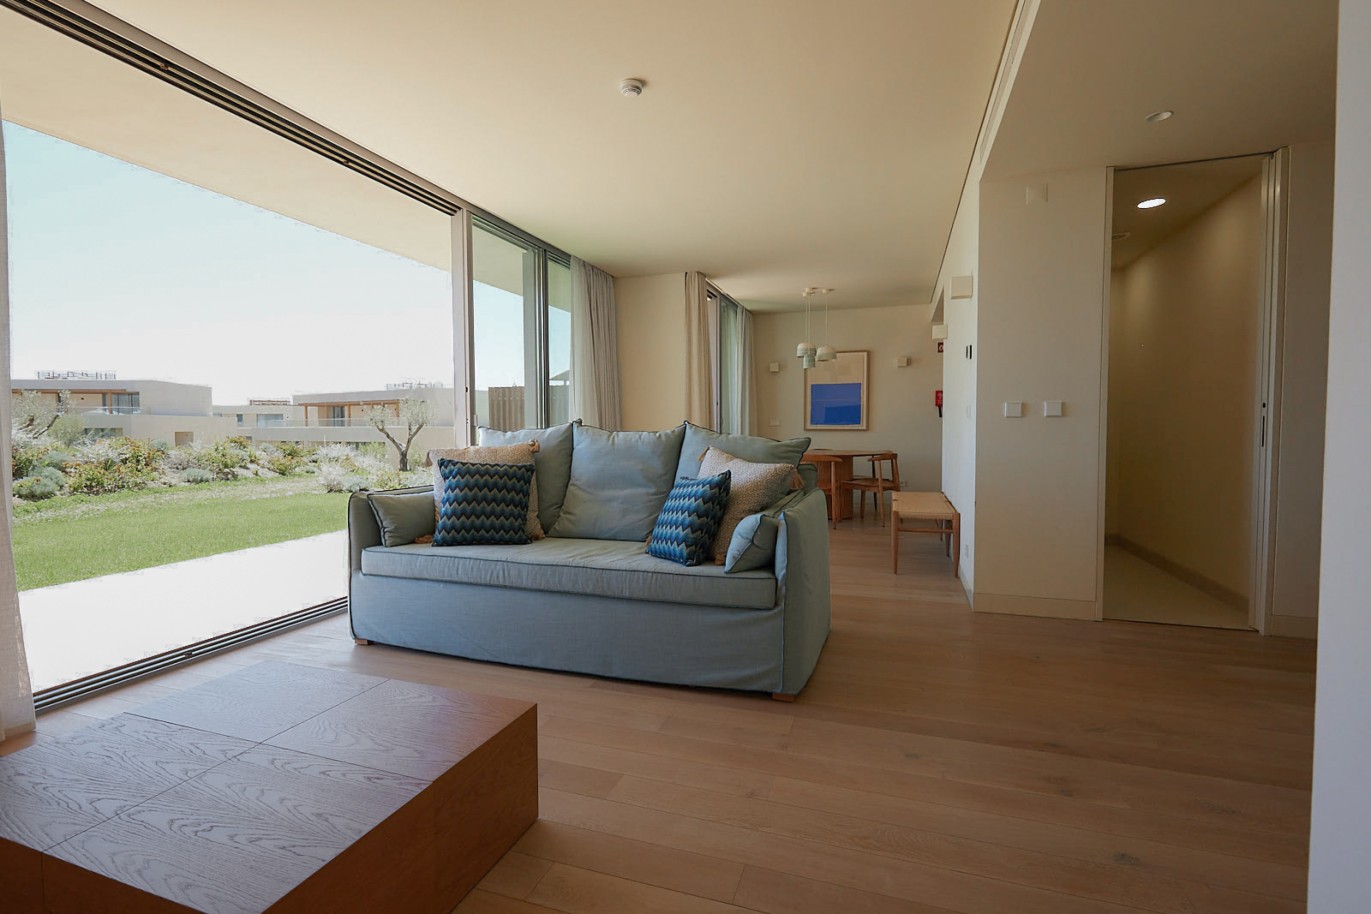 2 bedroom apartment in resort, for sale in Porches, Algarve_228718